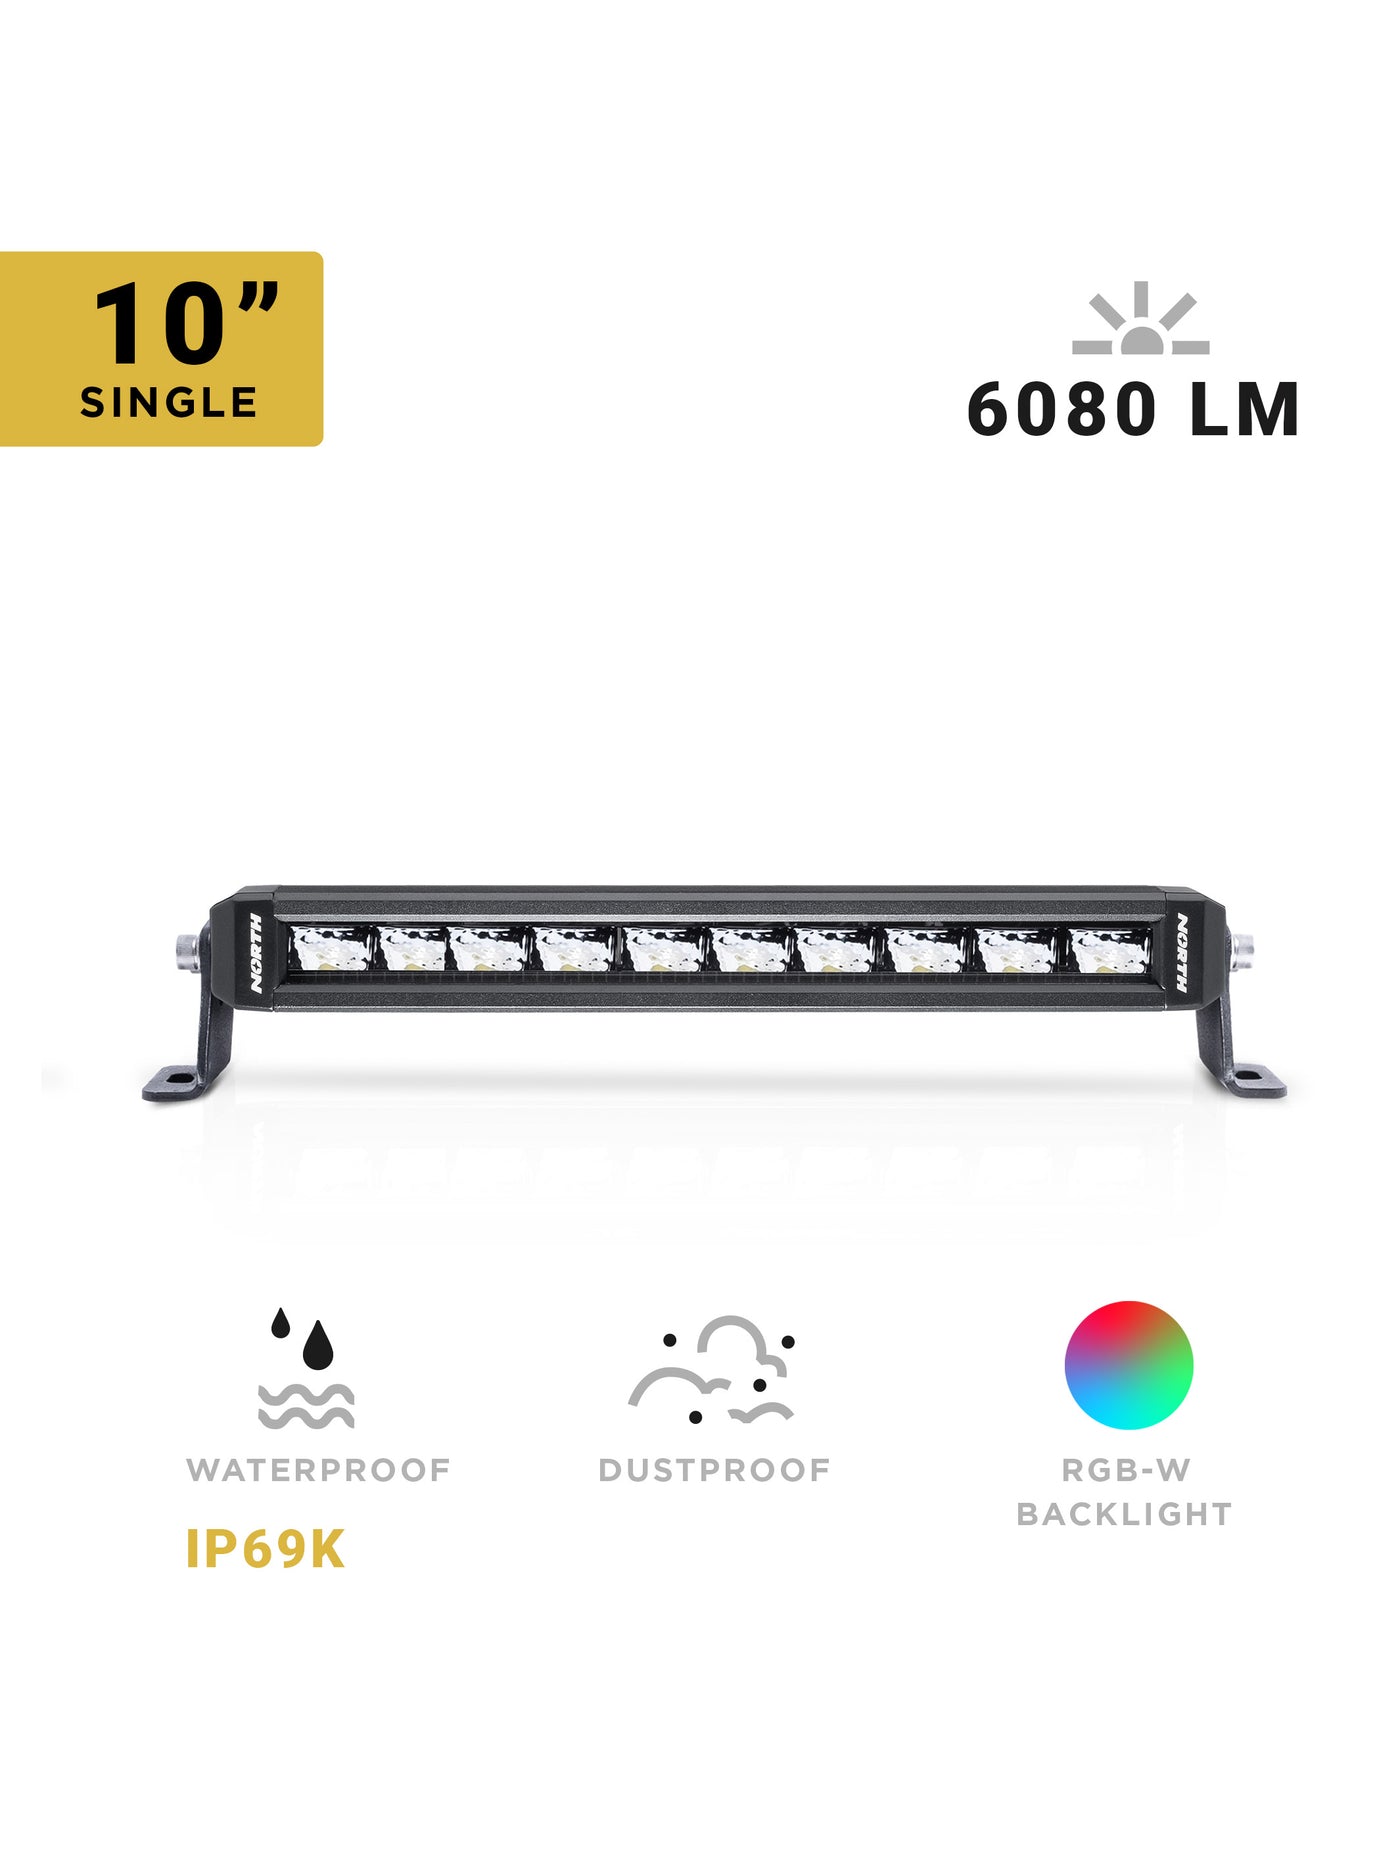 10" RGB-W Light Bar Details - North Lights